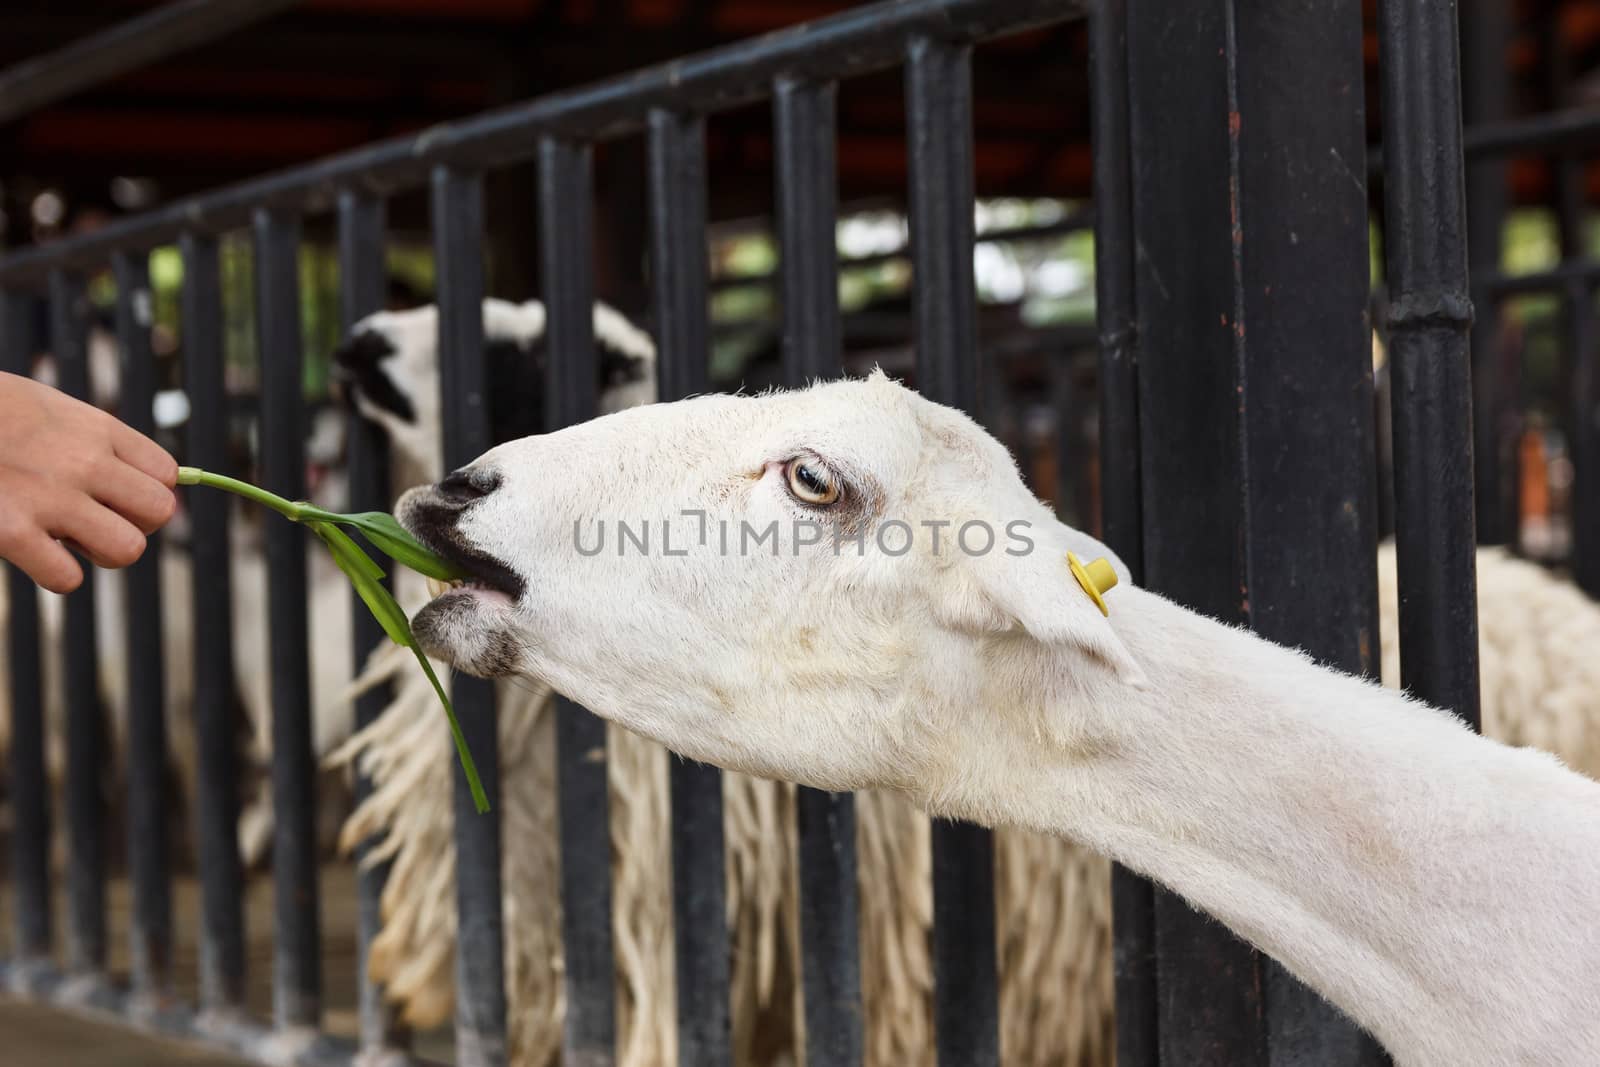 Hand feeding grass to goat. by stigmatize